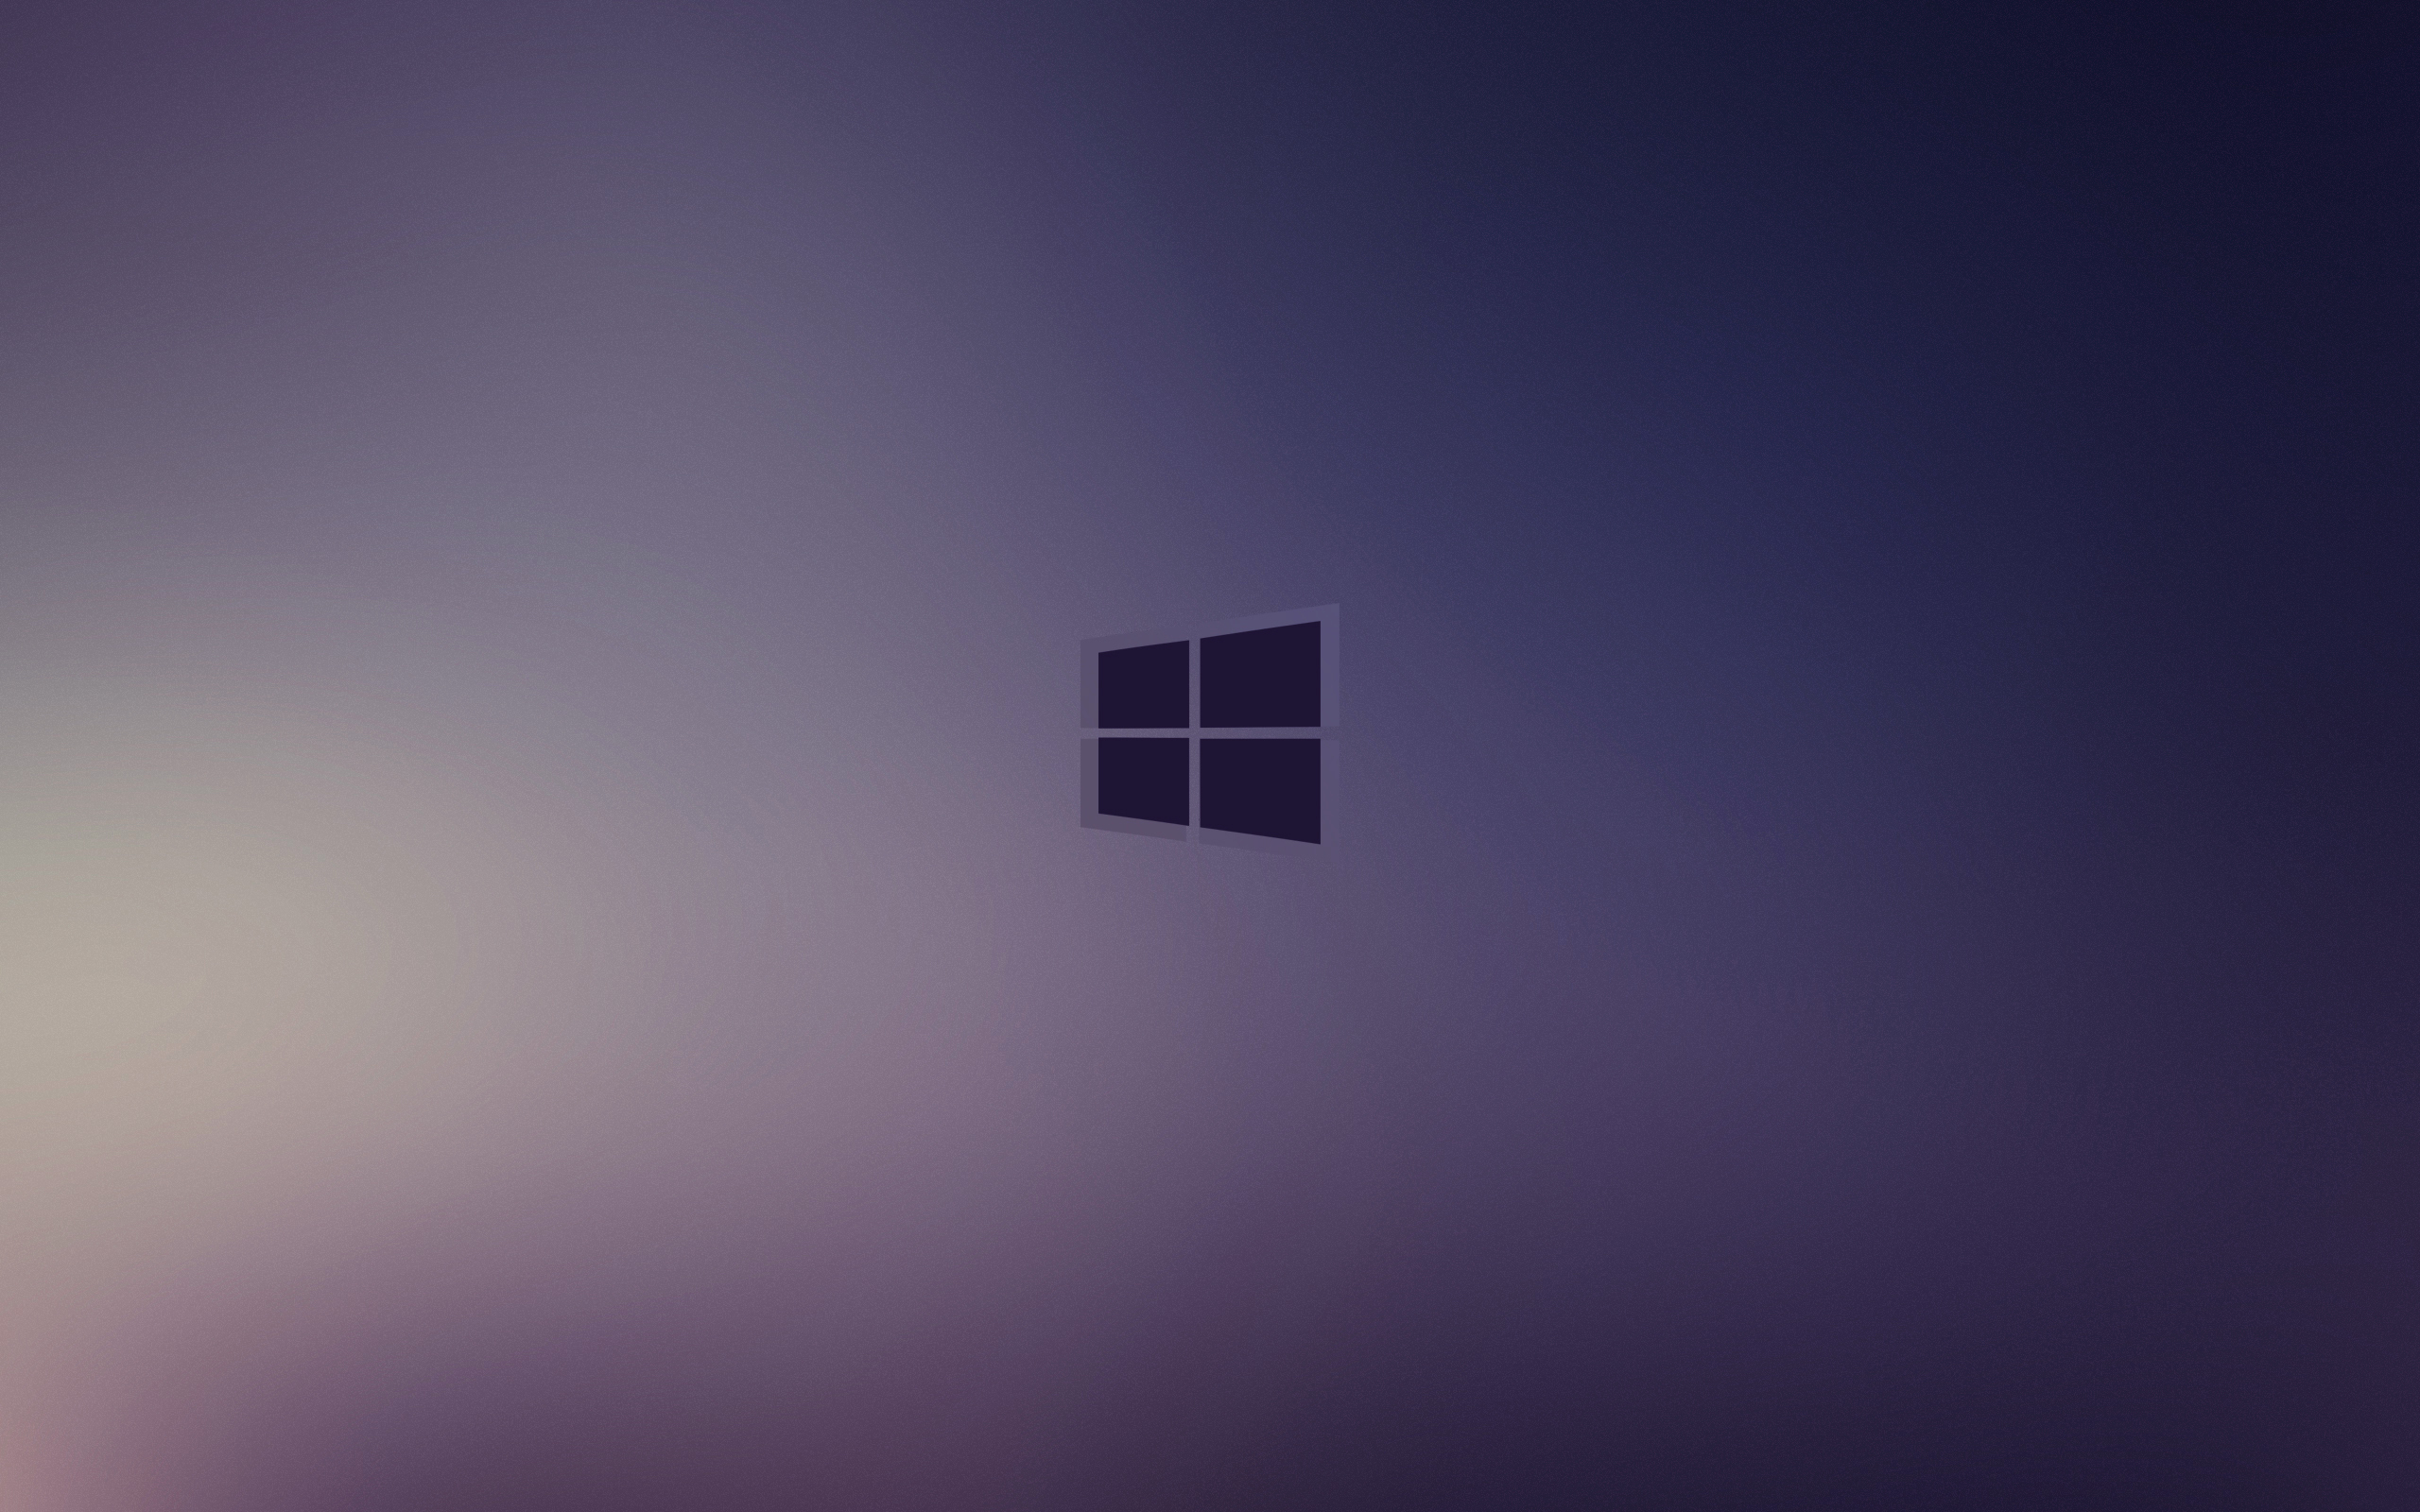 50+] Windows 10 Minimal Wallpaper - WallpaperSafari